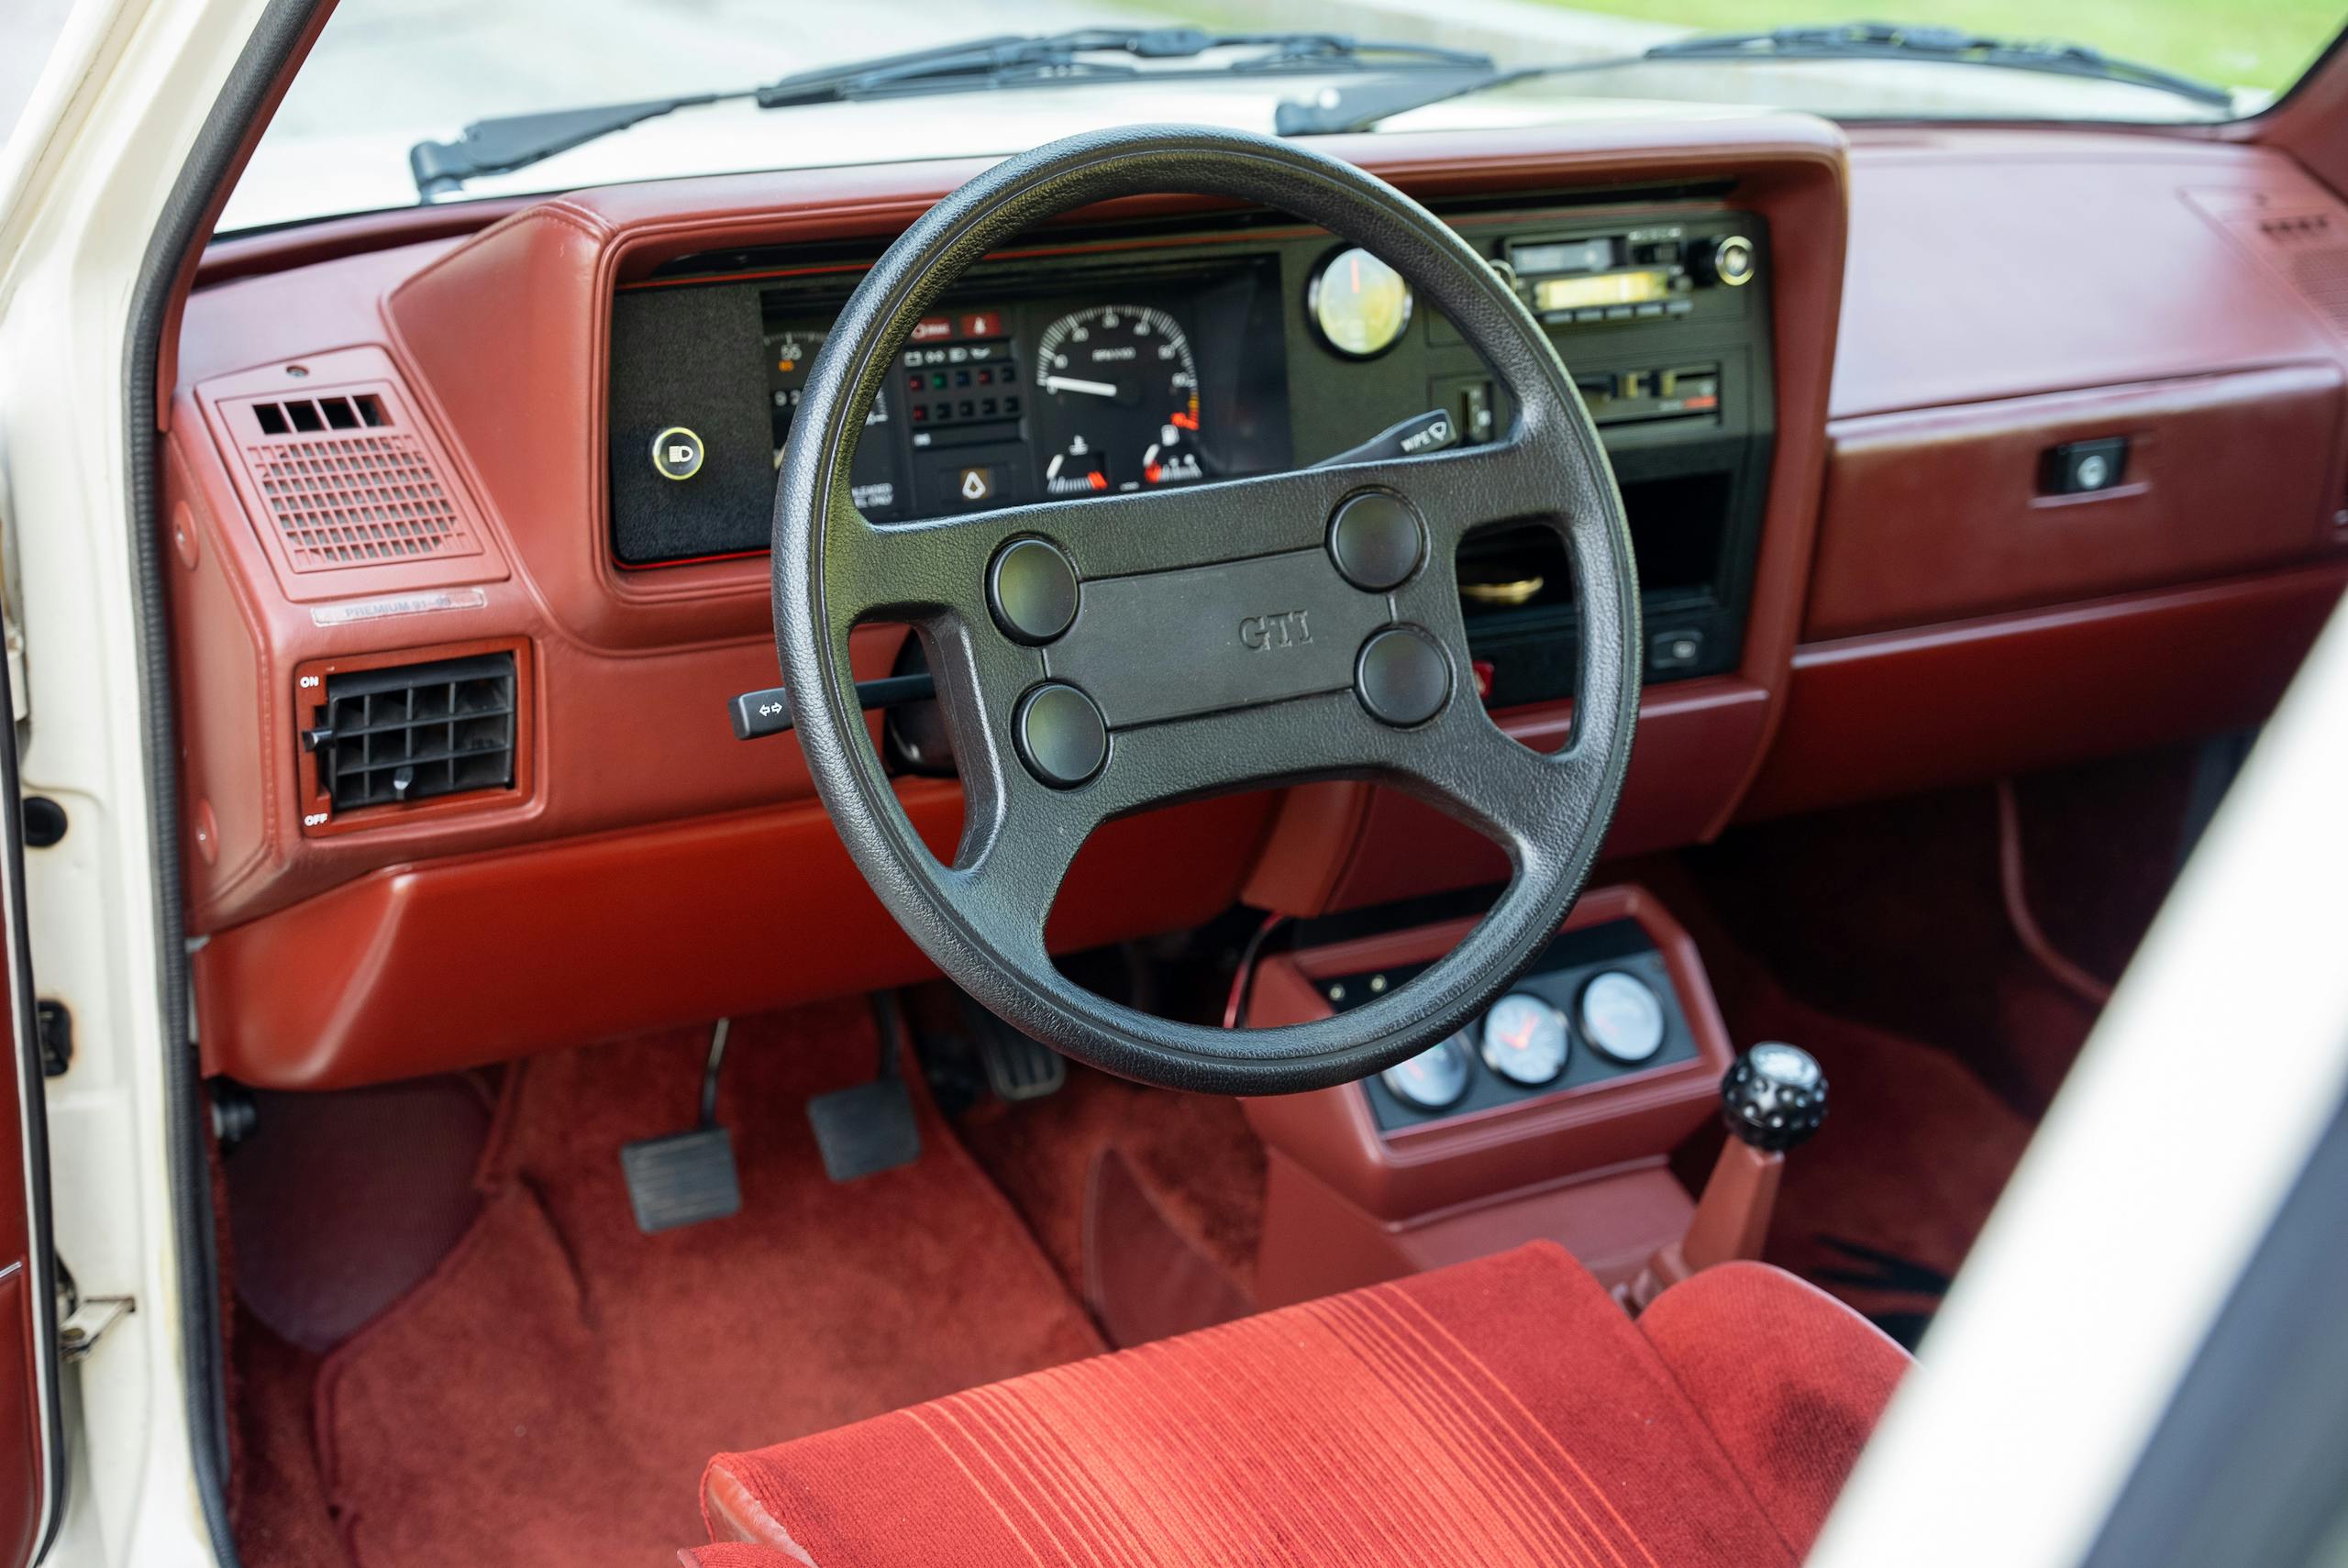 1983 Volkswagen Rabbit GTI Callaway hot hatch interior cockpit